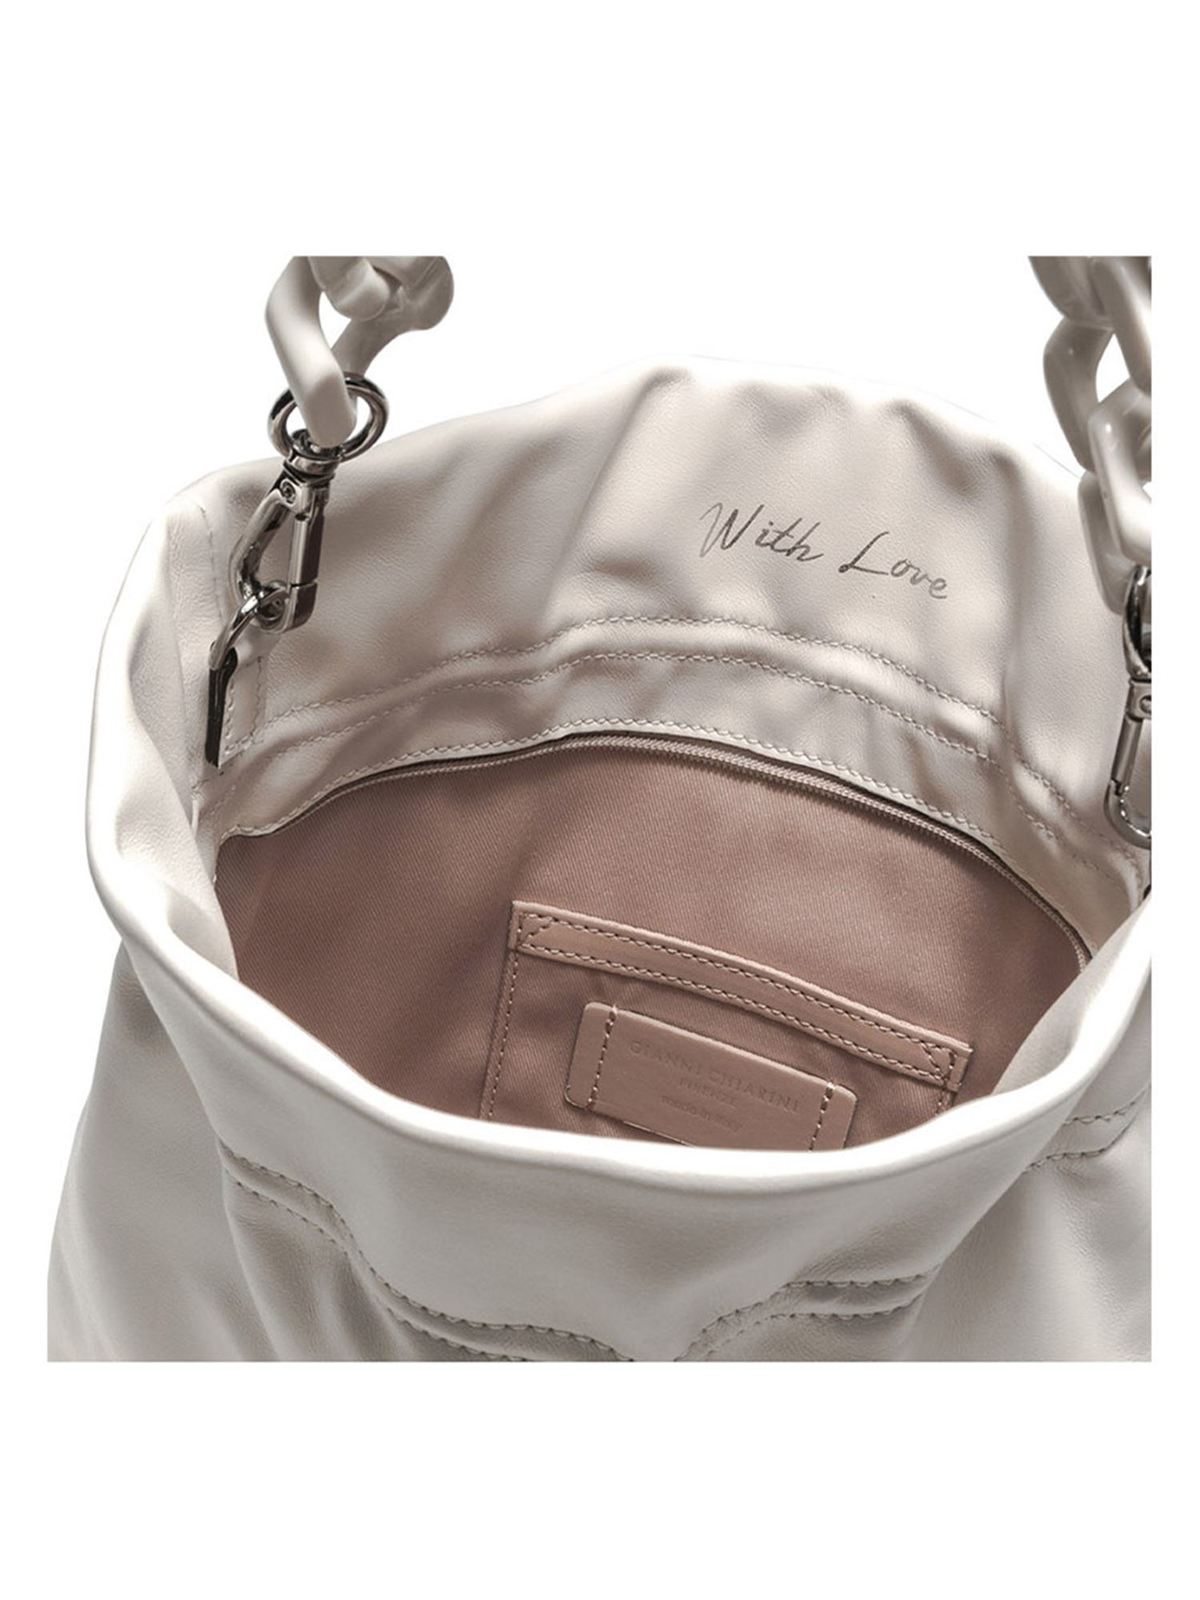 Oriflame Bags & Handbags for Women | eBay